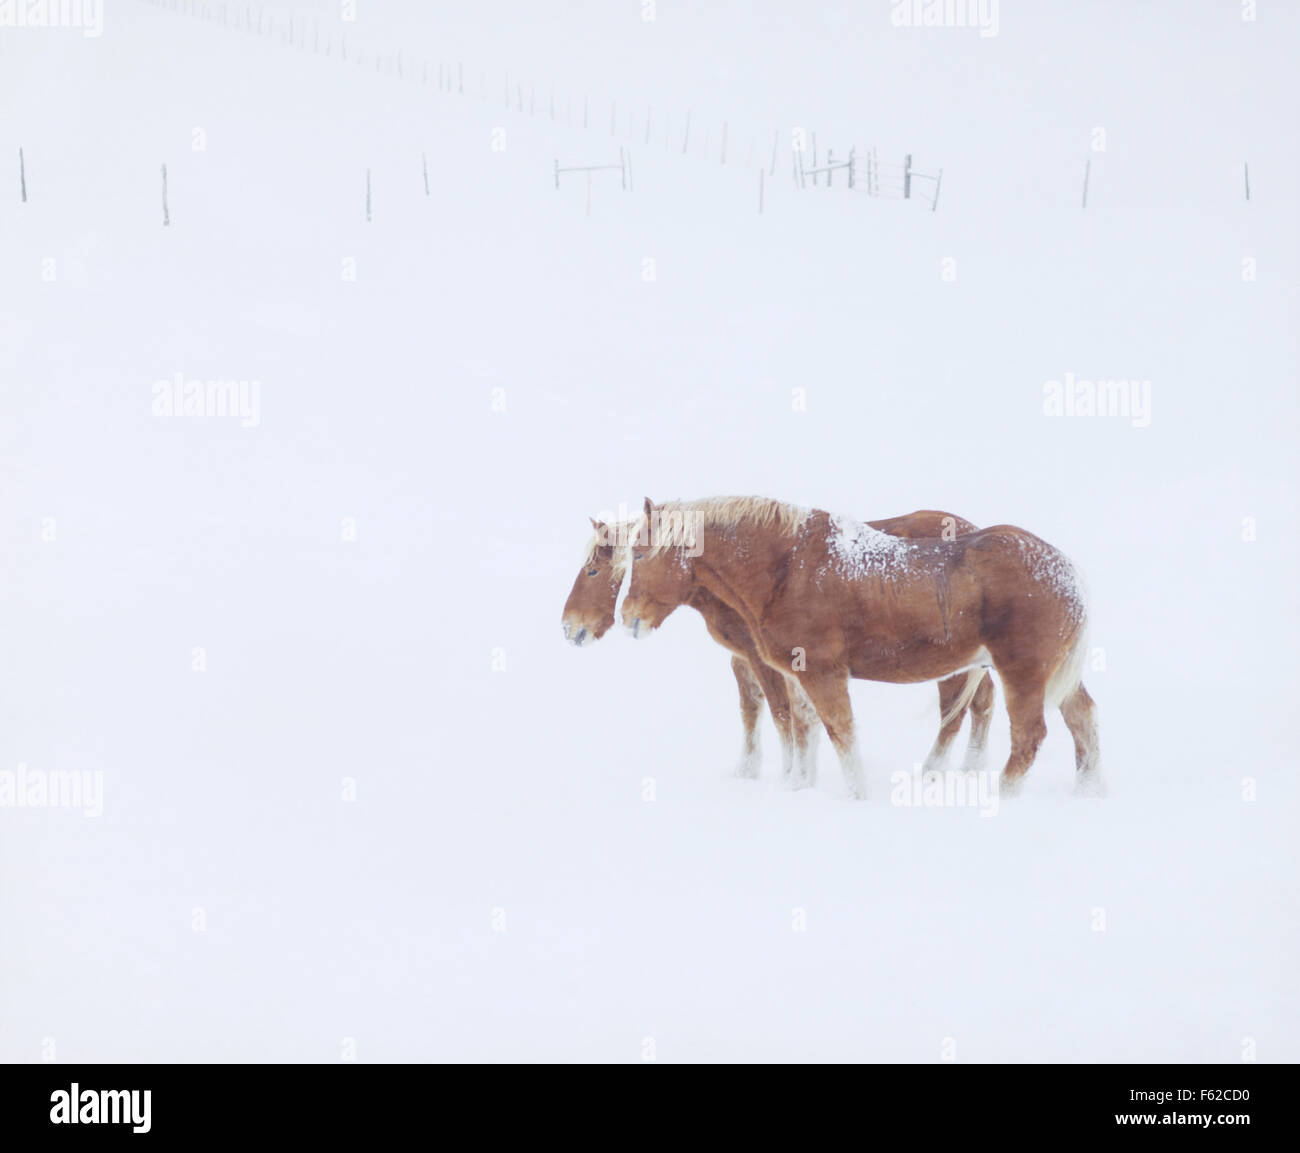 Stati Uniti d'America, Colorado, due cavalli in tempesta di neve Foto Stock